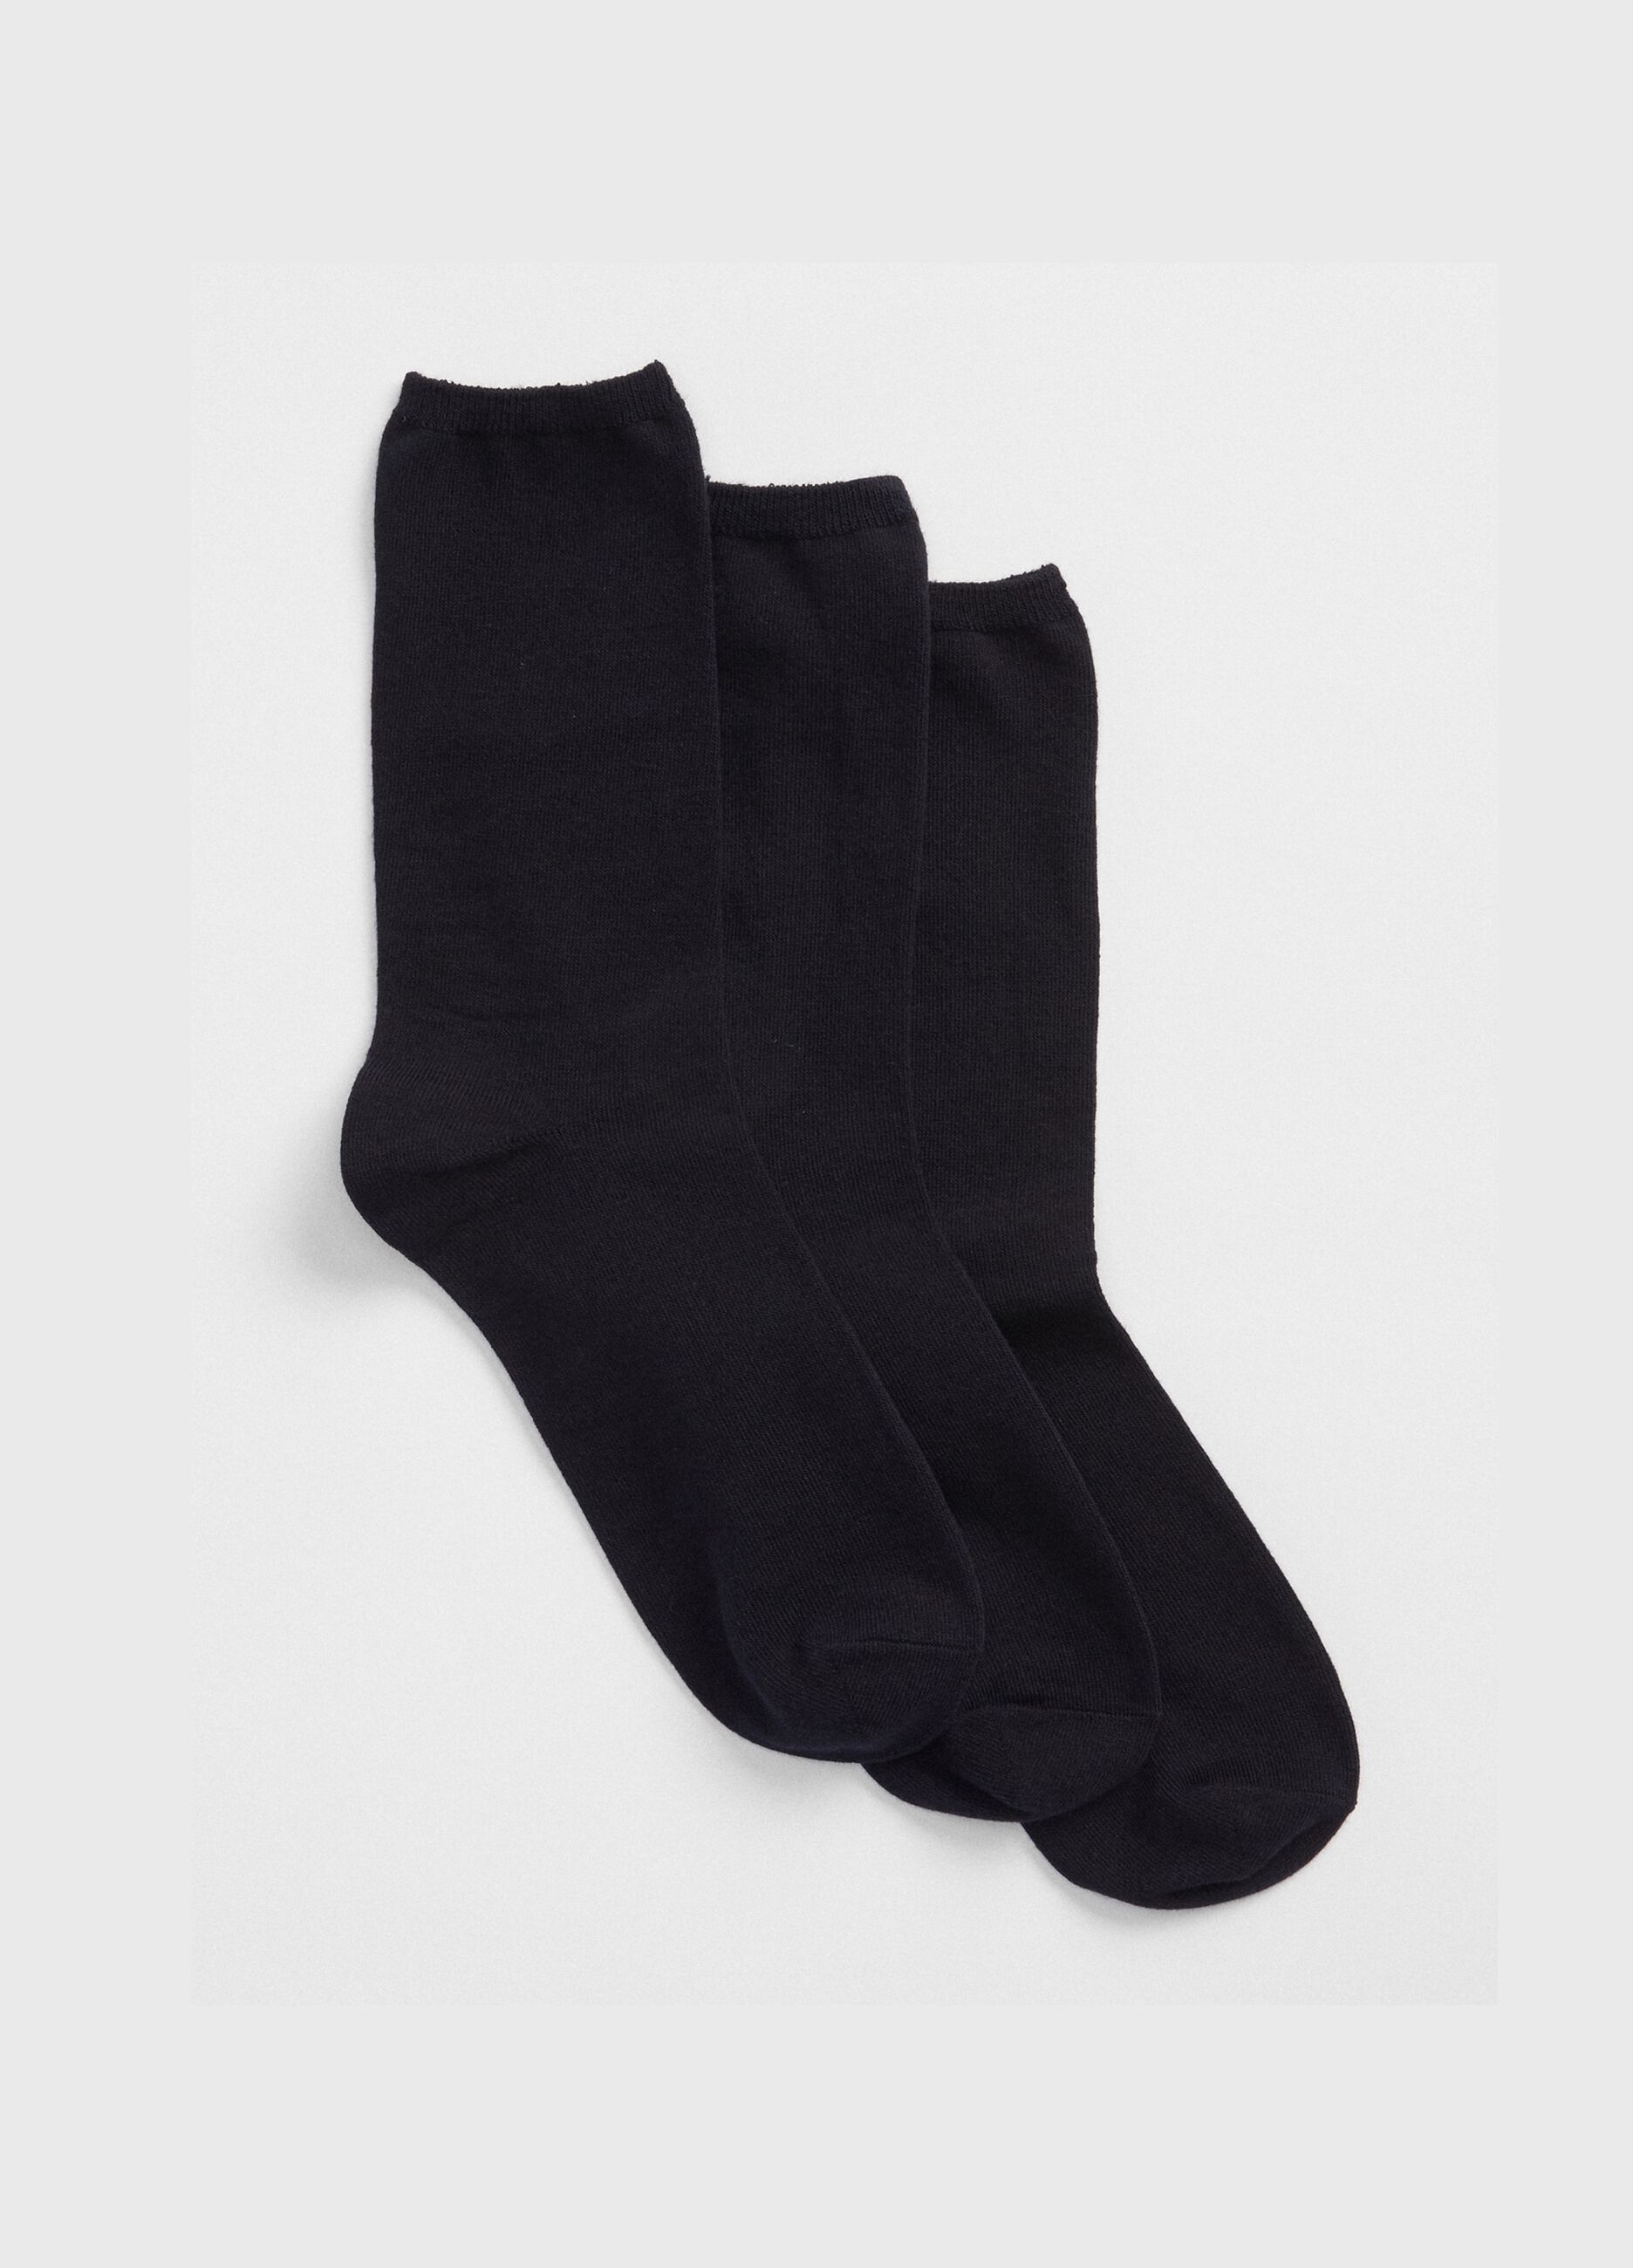 Three-pair pack of mid-length stretch socks